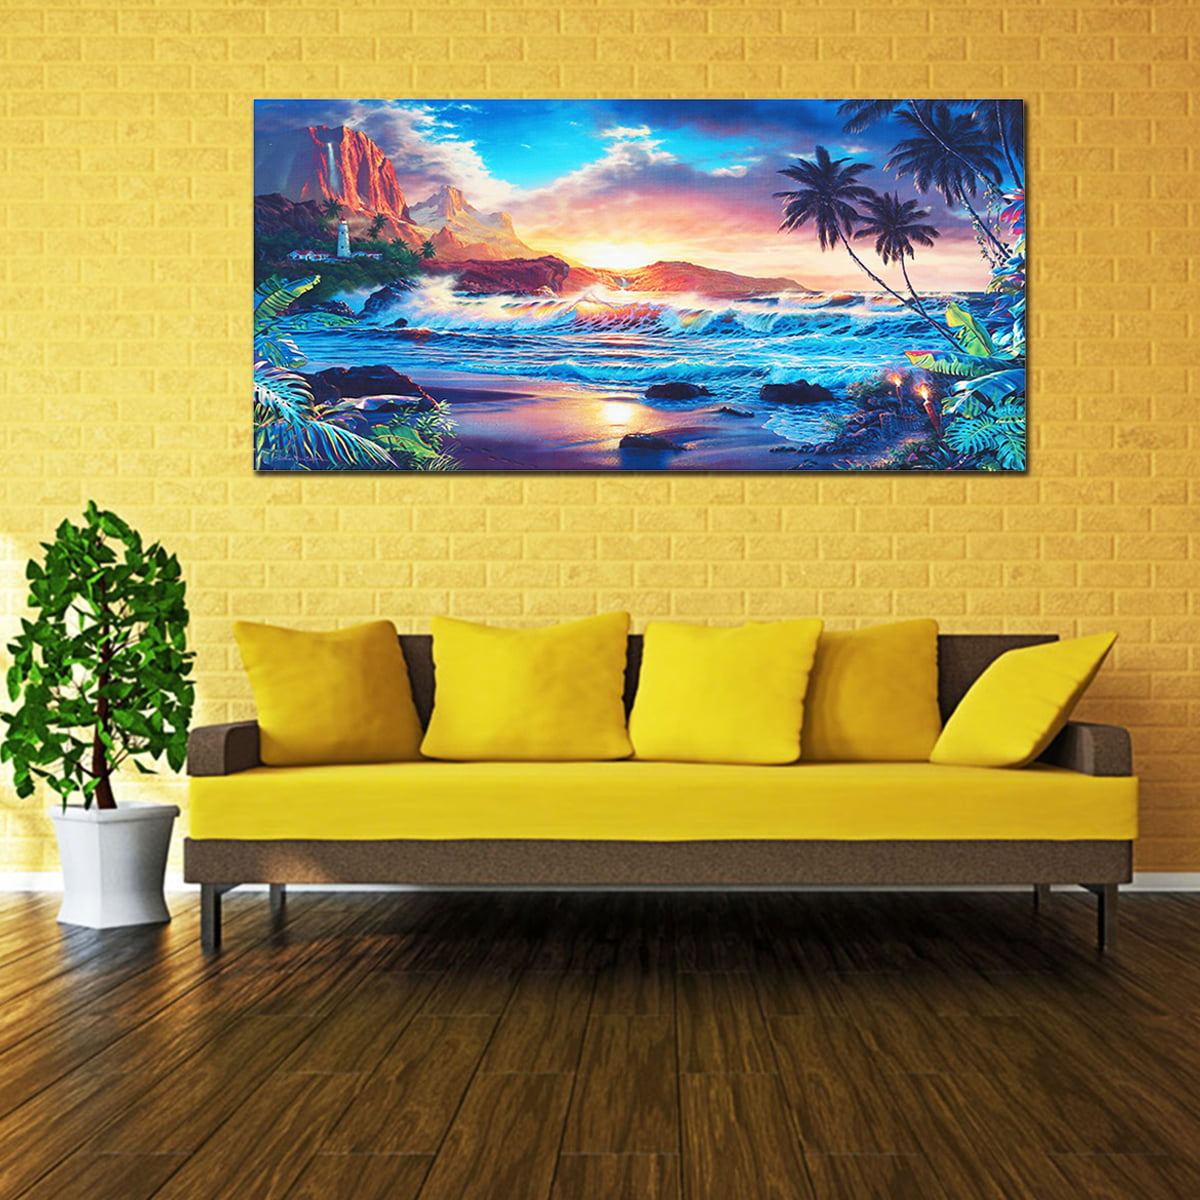 12"x20"Tropical Beach Pool Scenery HD Print on Canvas Home Decor Room Wall Art